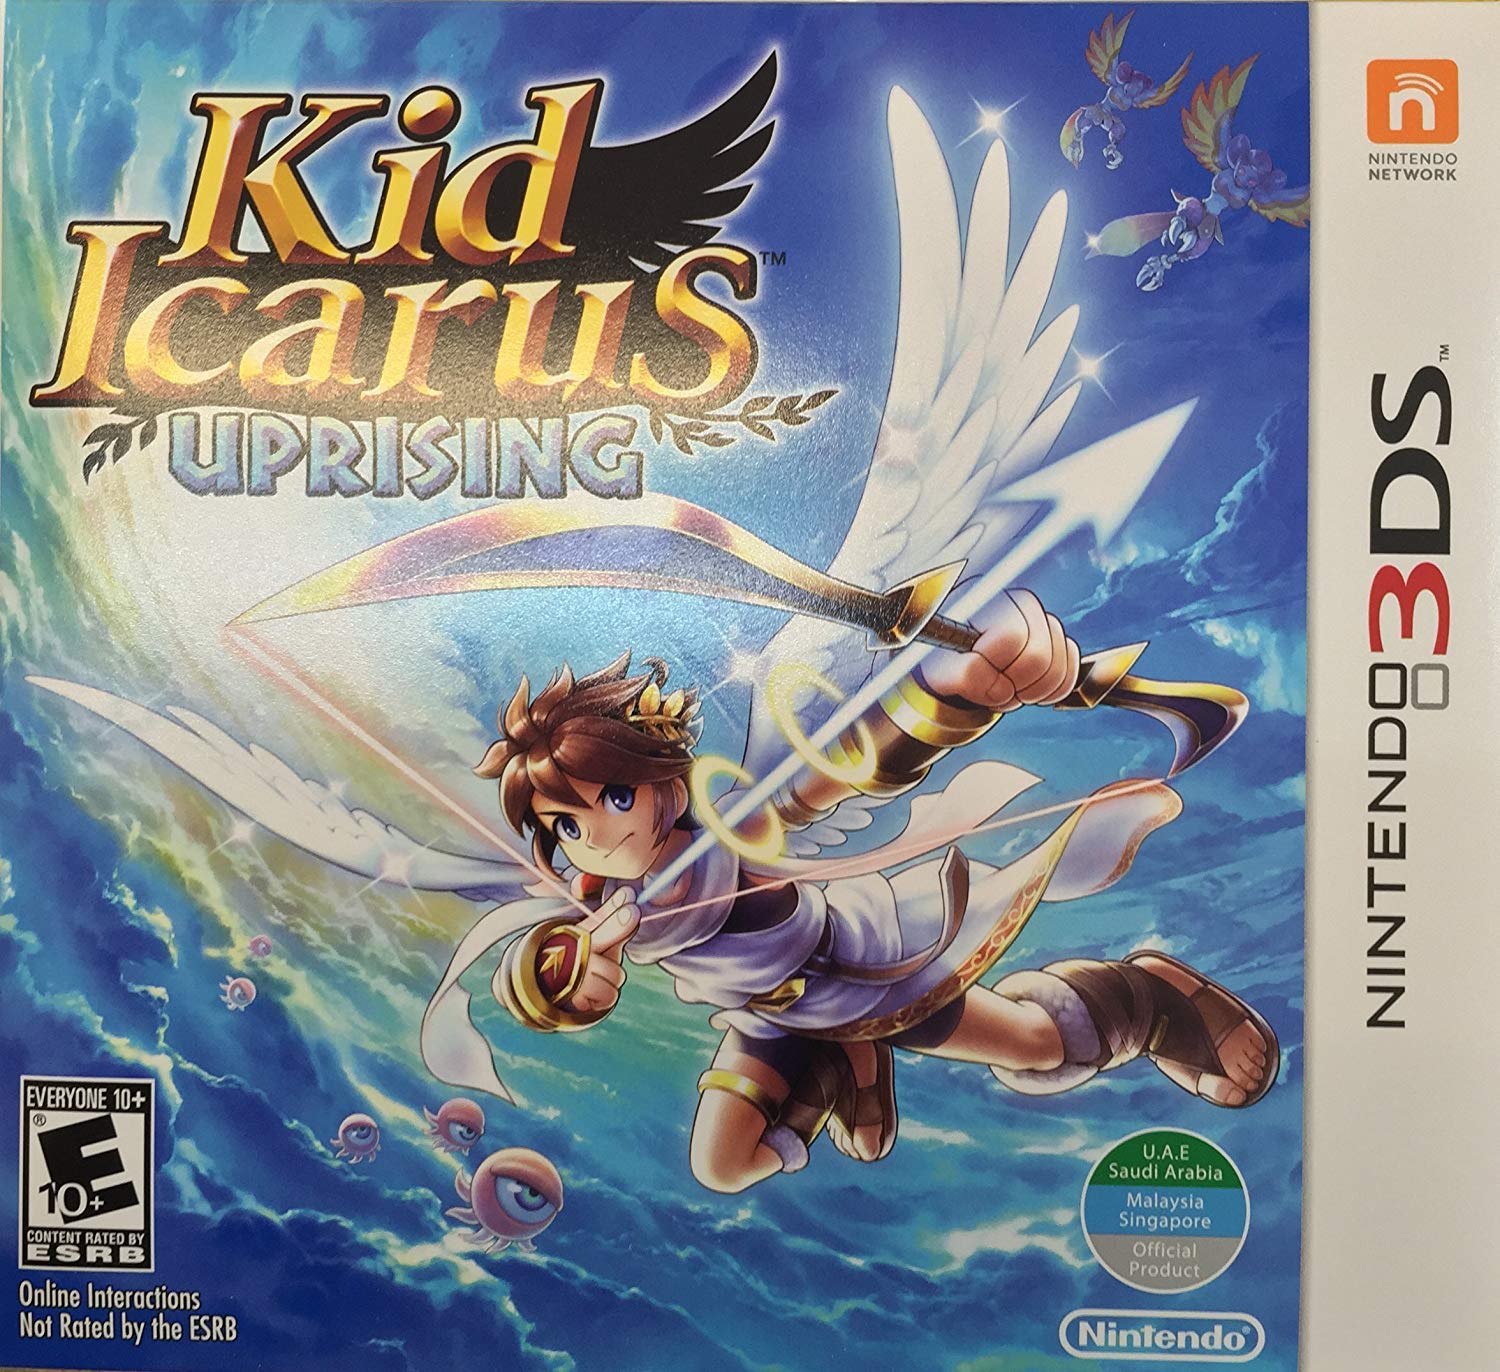 Icarus Games @icarusgames - MyMiniFactory